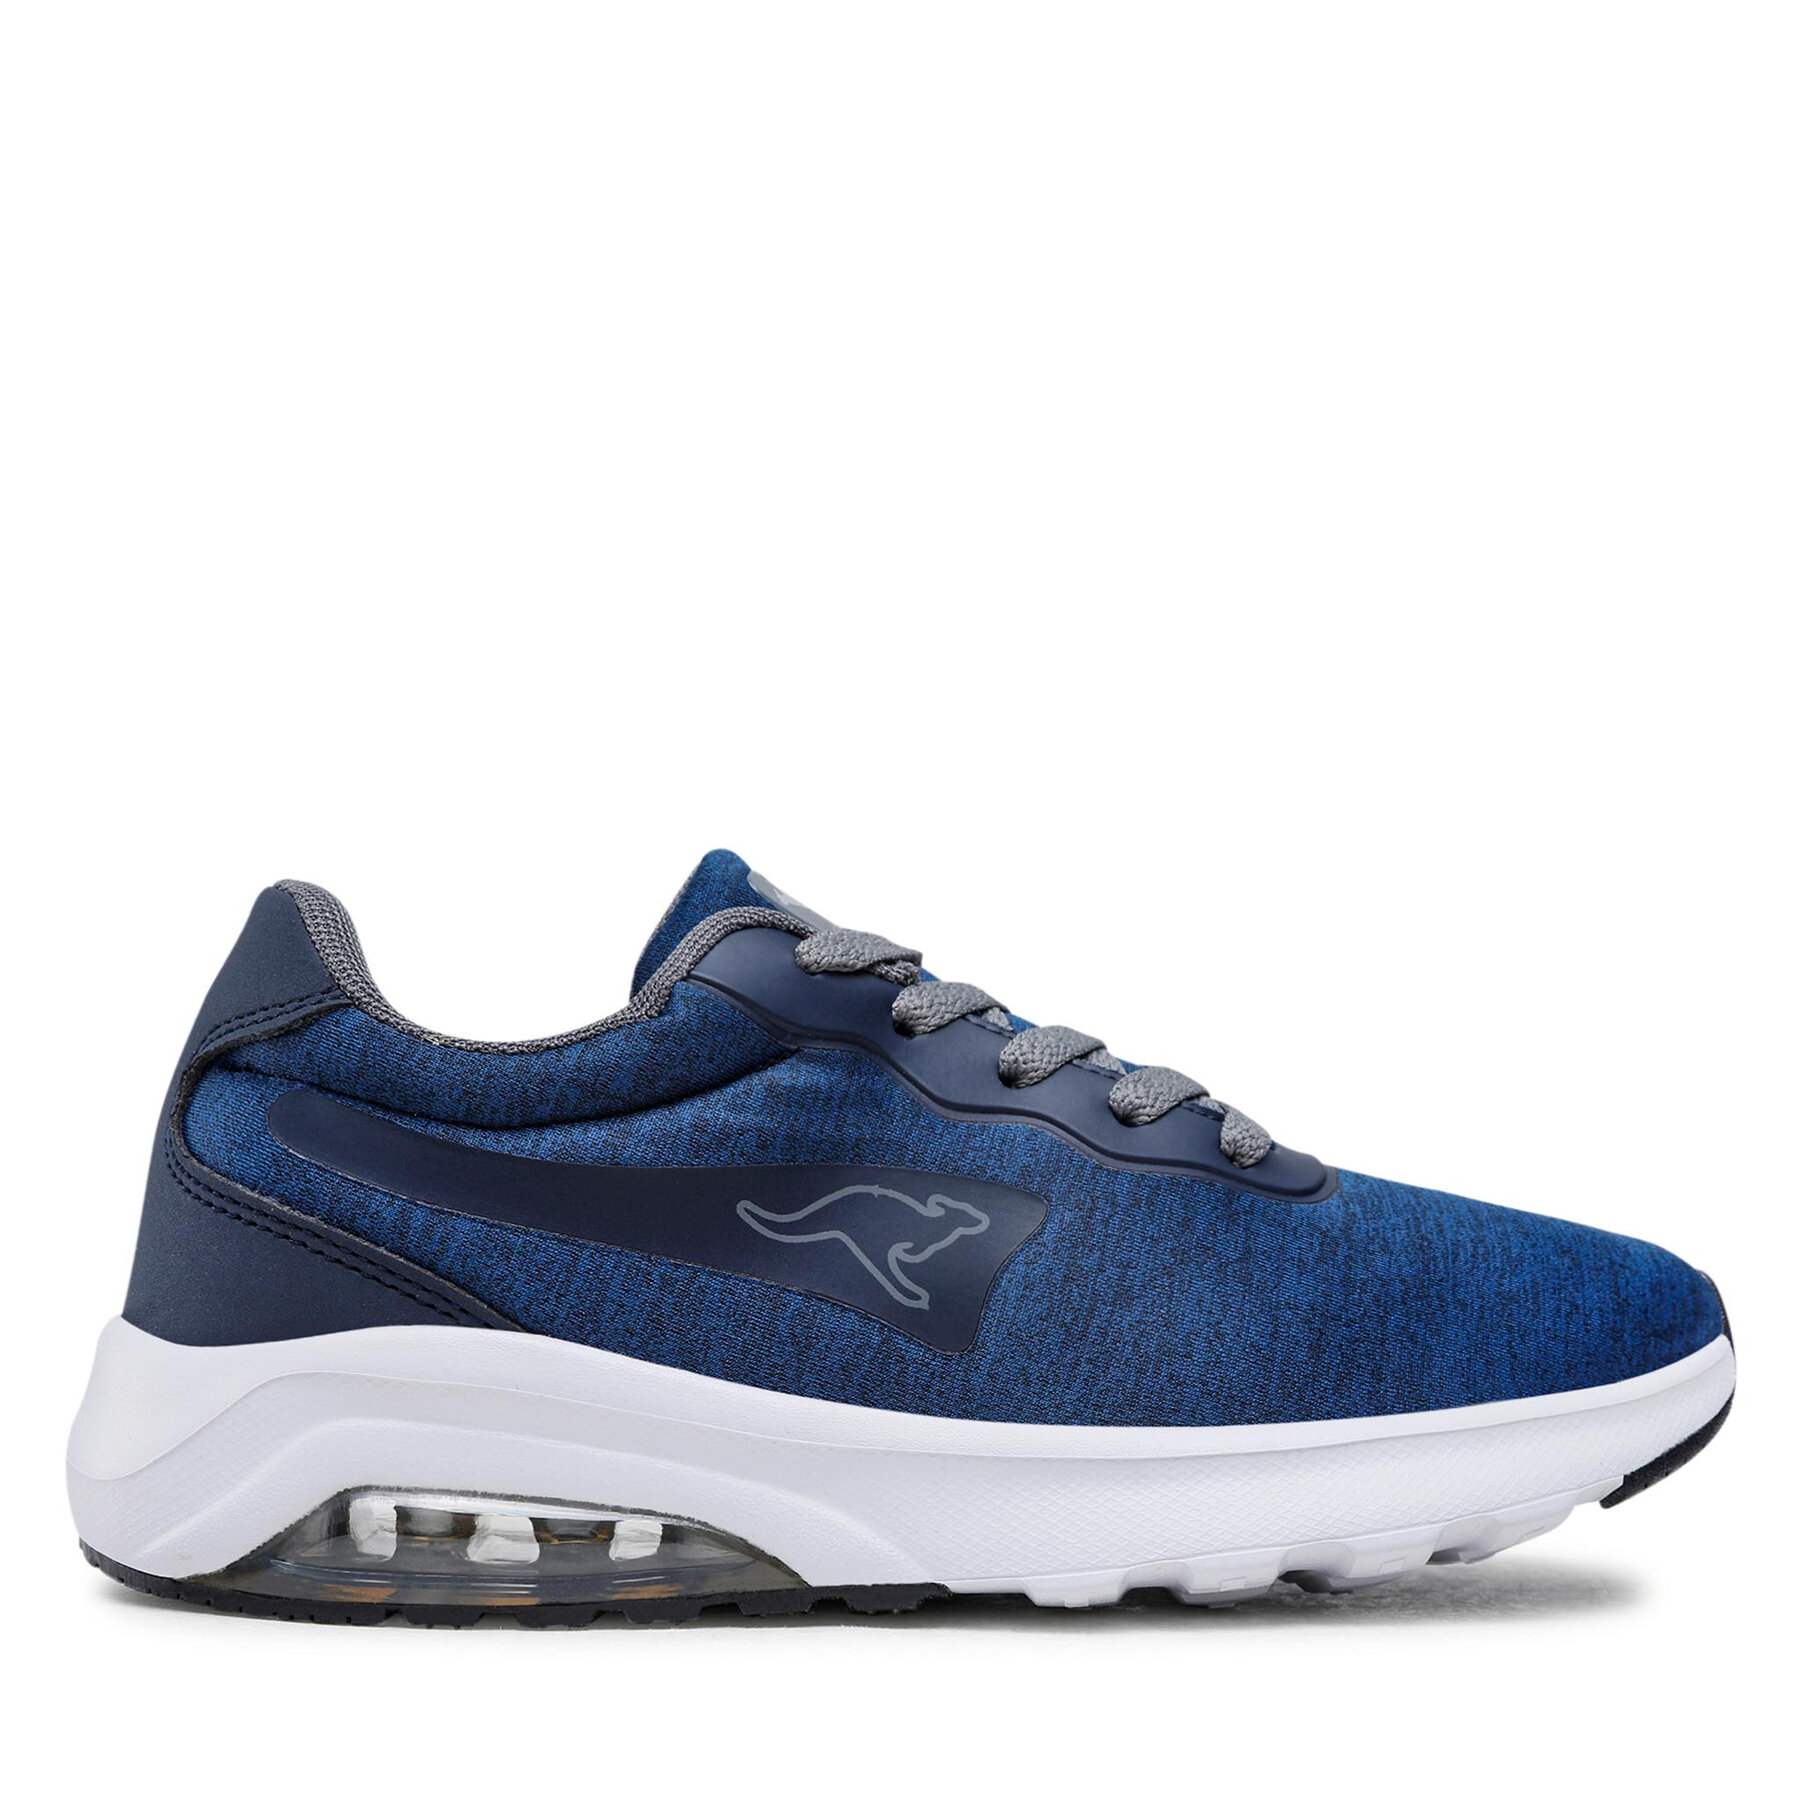 Sneakers KangaRoos K-Air Core 39301 000 4096 Bleu marine